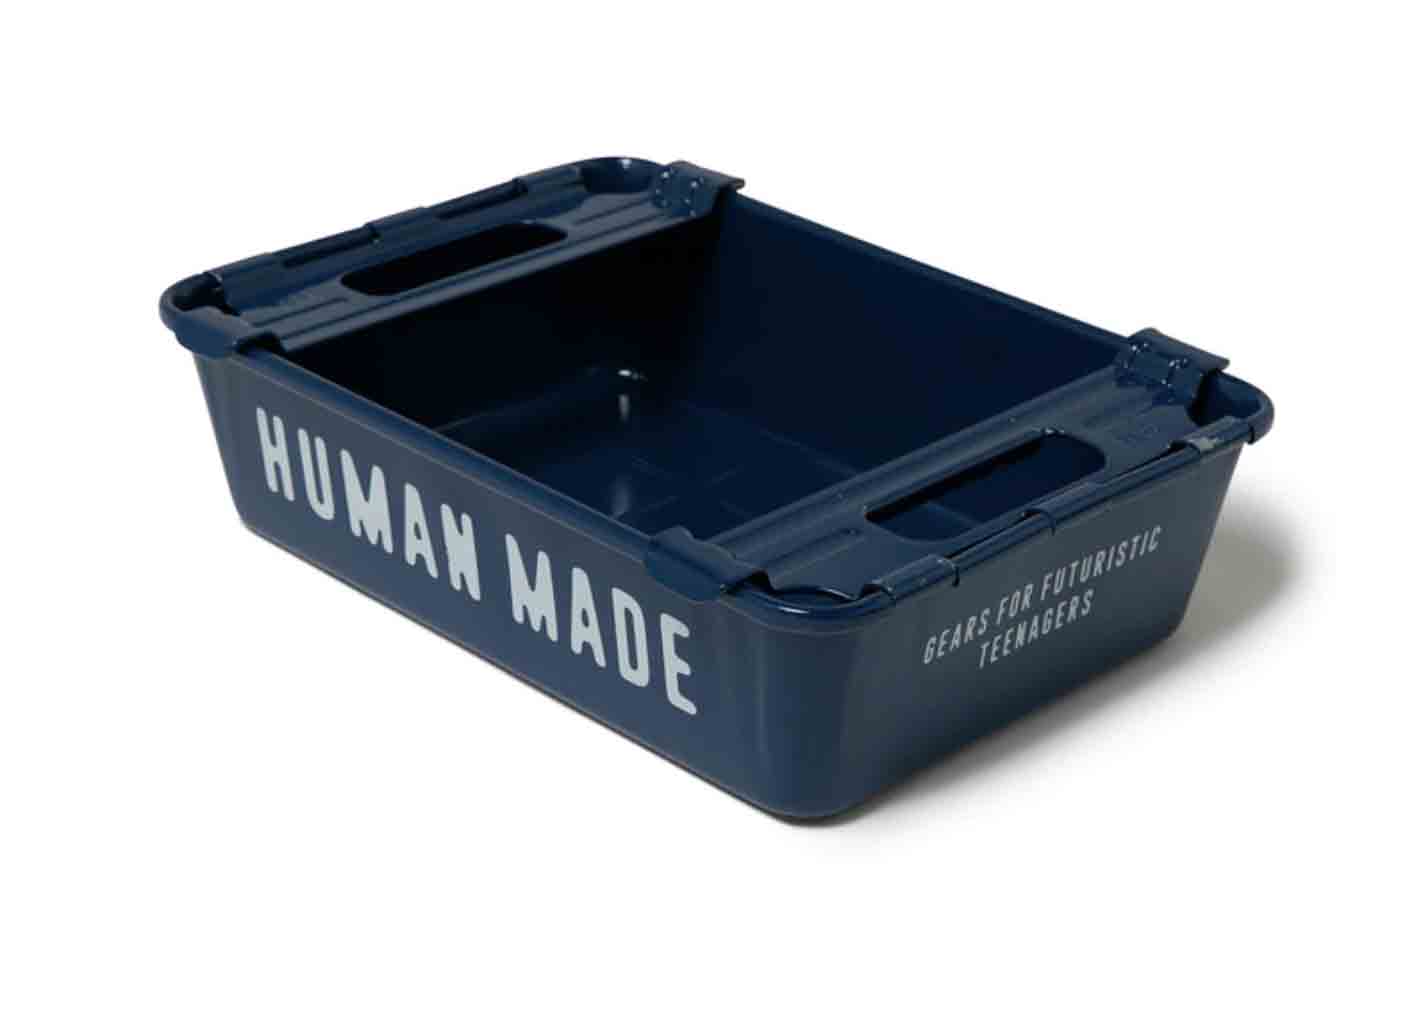 HUMAN MADE STEEL STACKING BOX